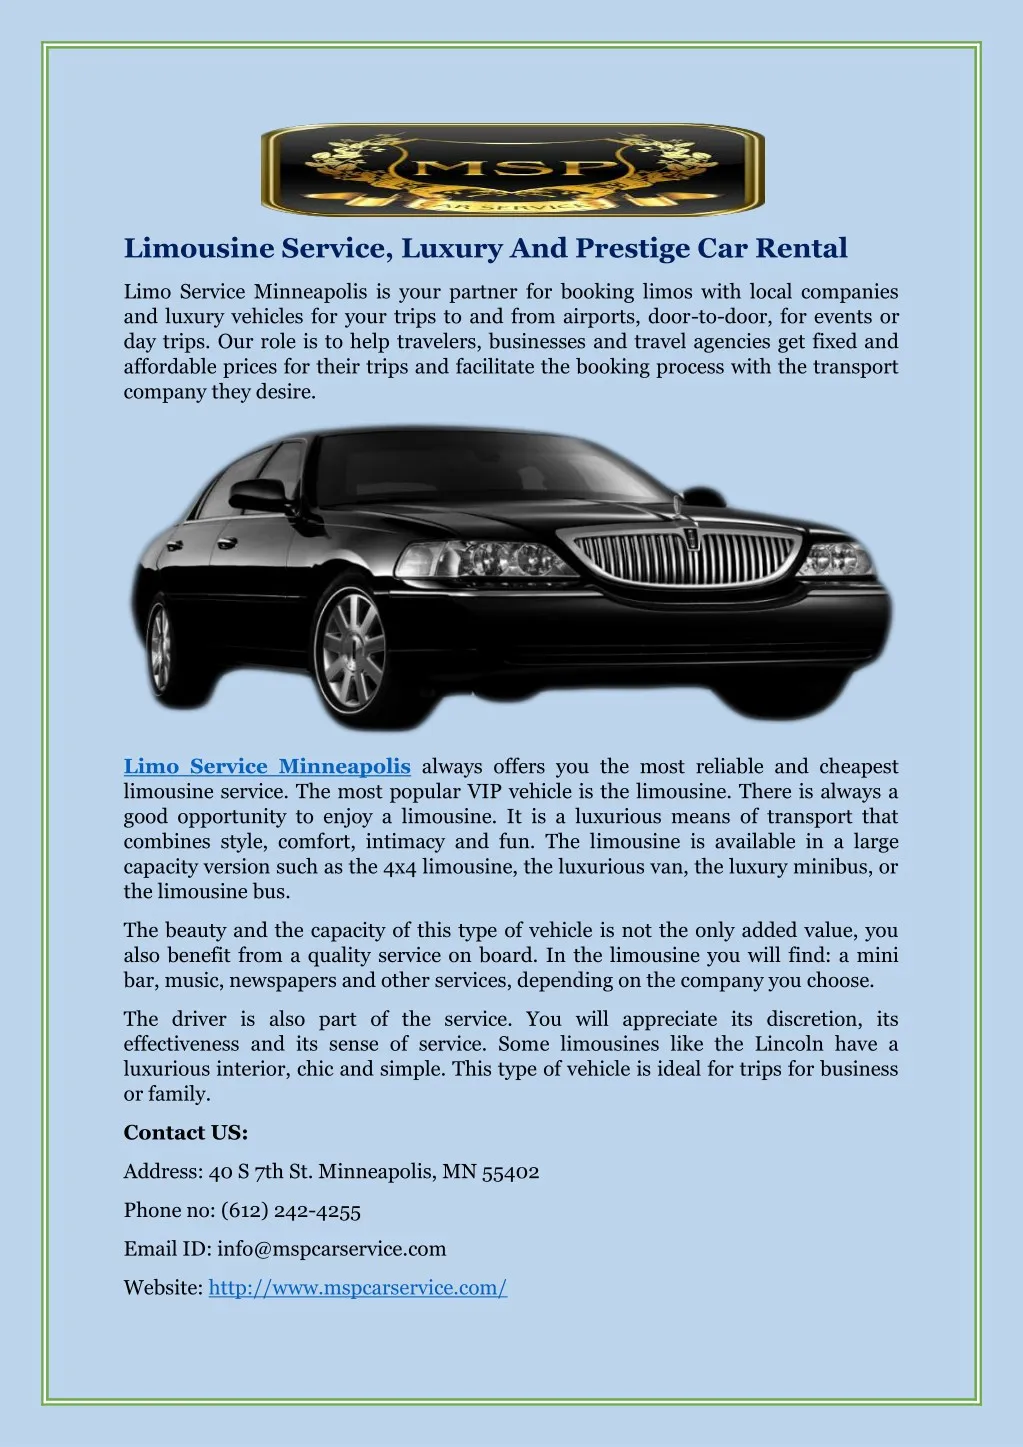 limousine service luxury and prestige car rental